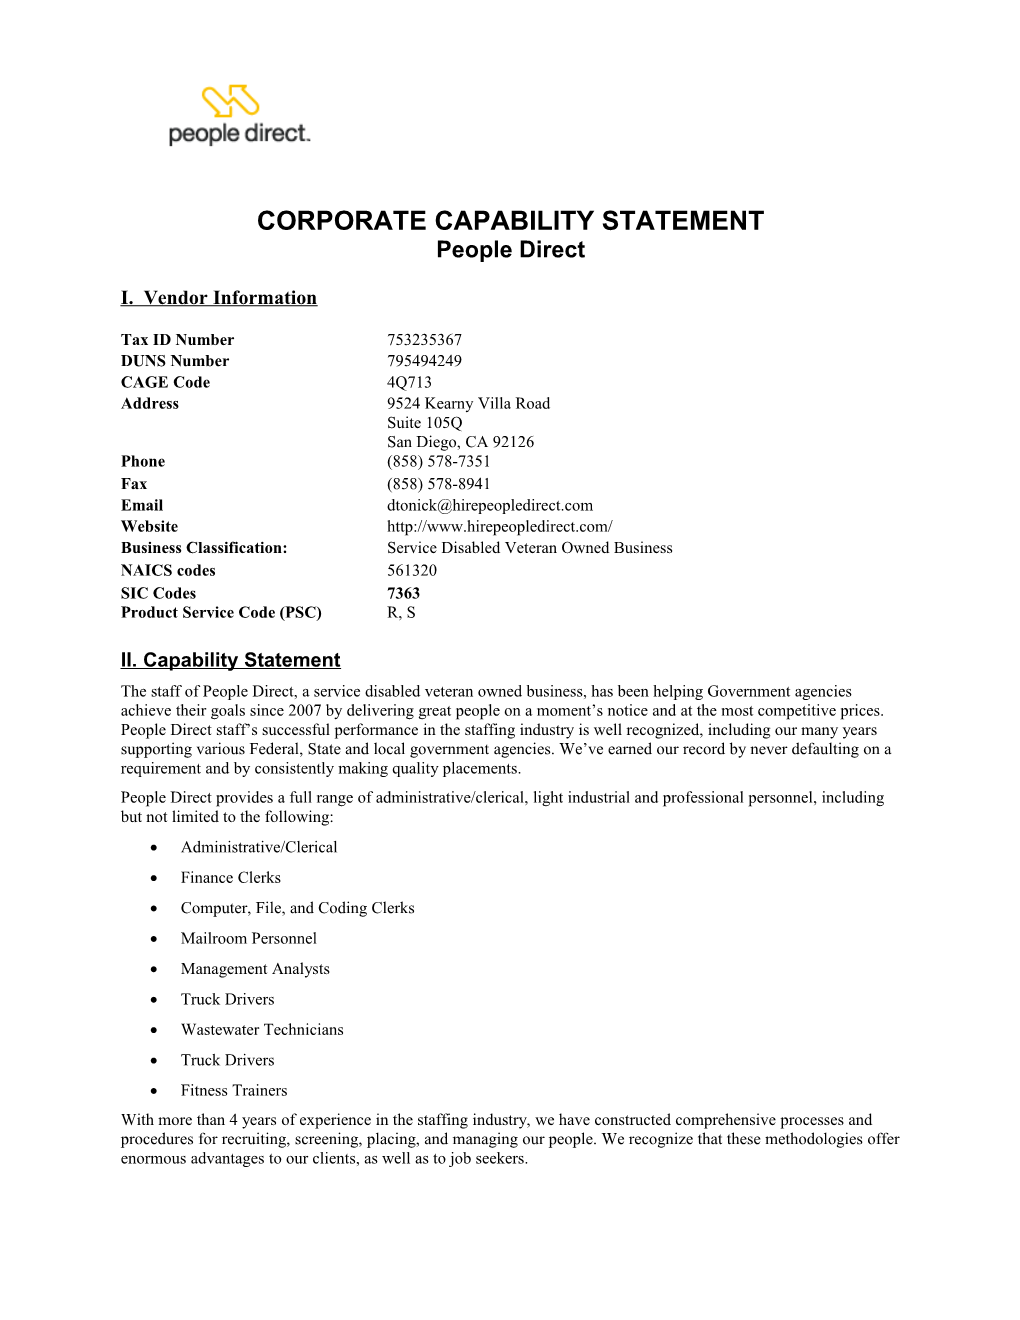 Corporate Capability Statement